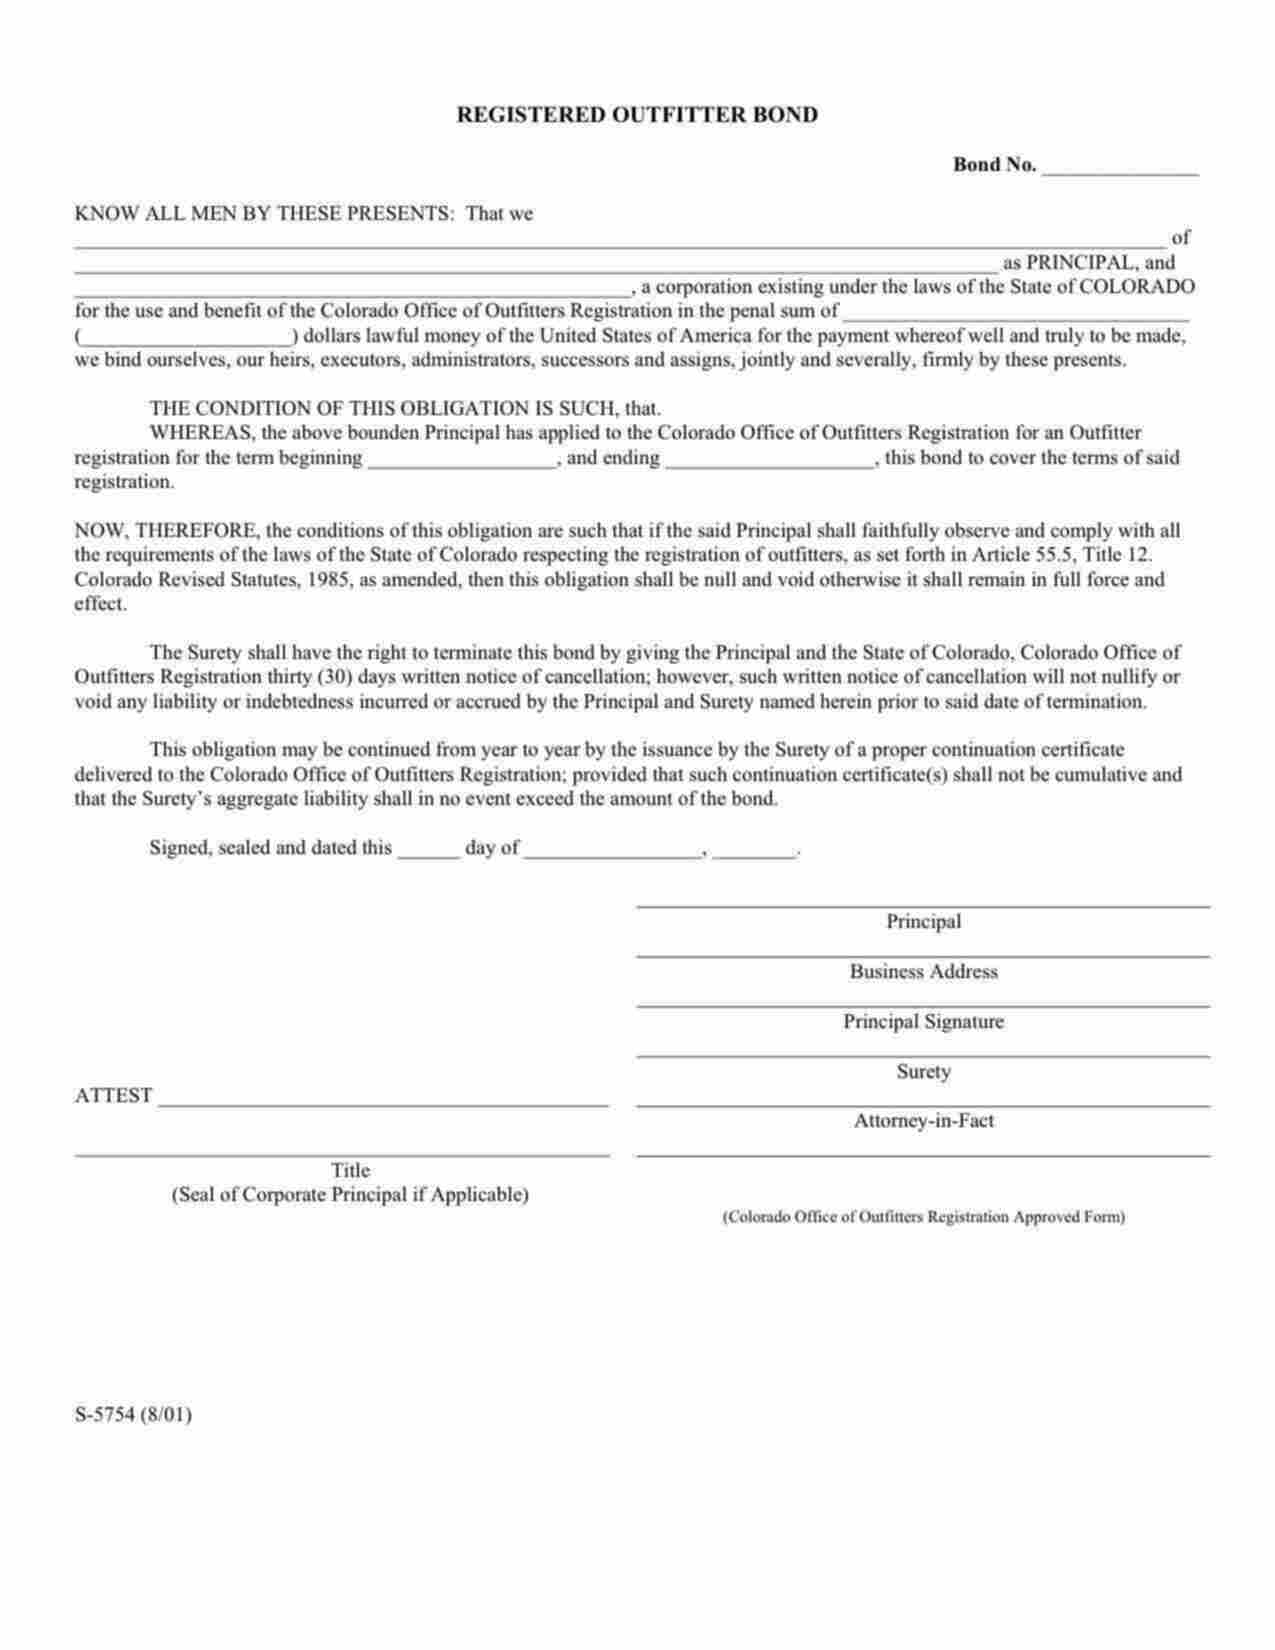 Colorado Registered Outfitter Bond Form